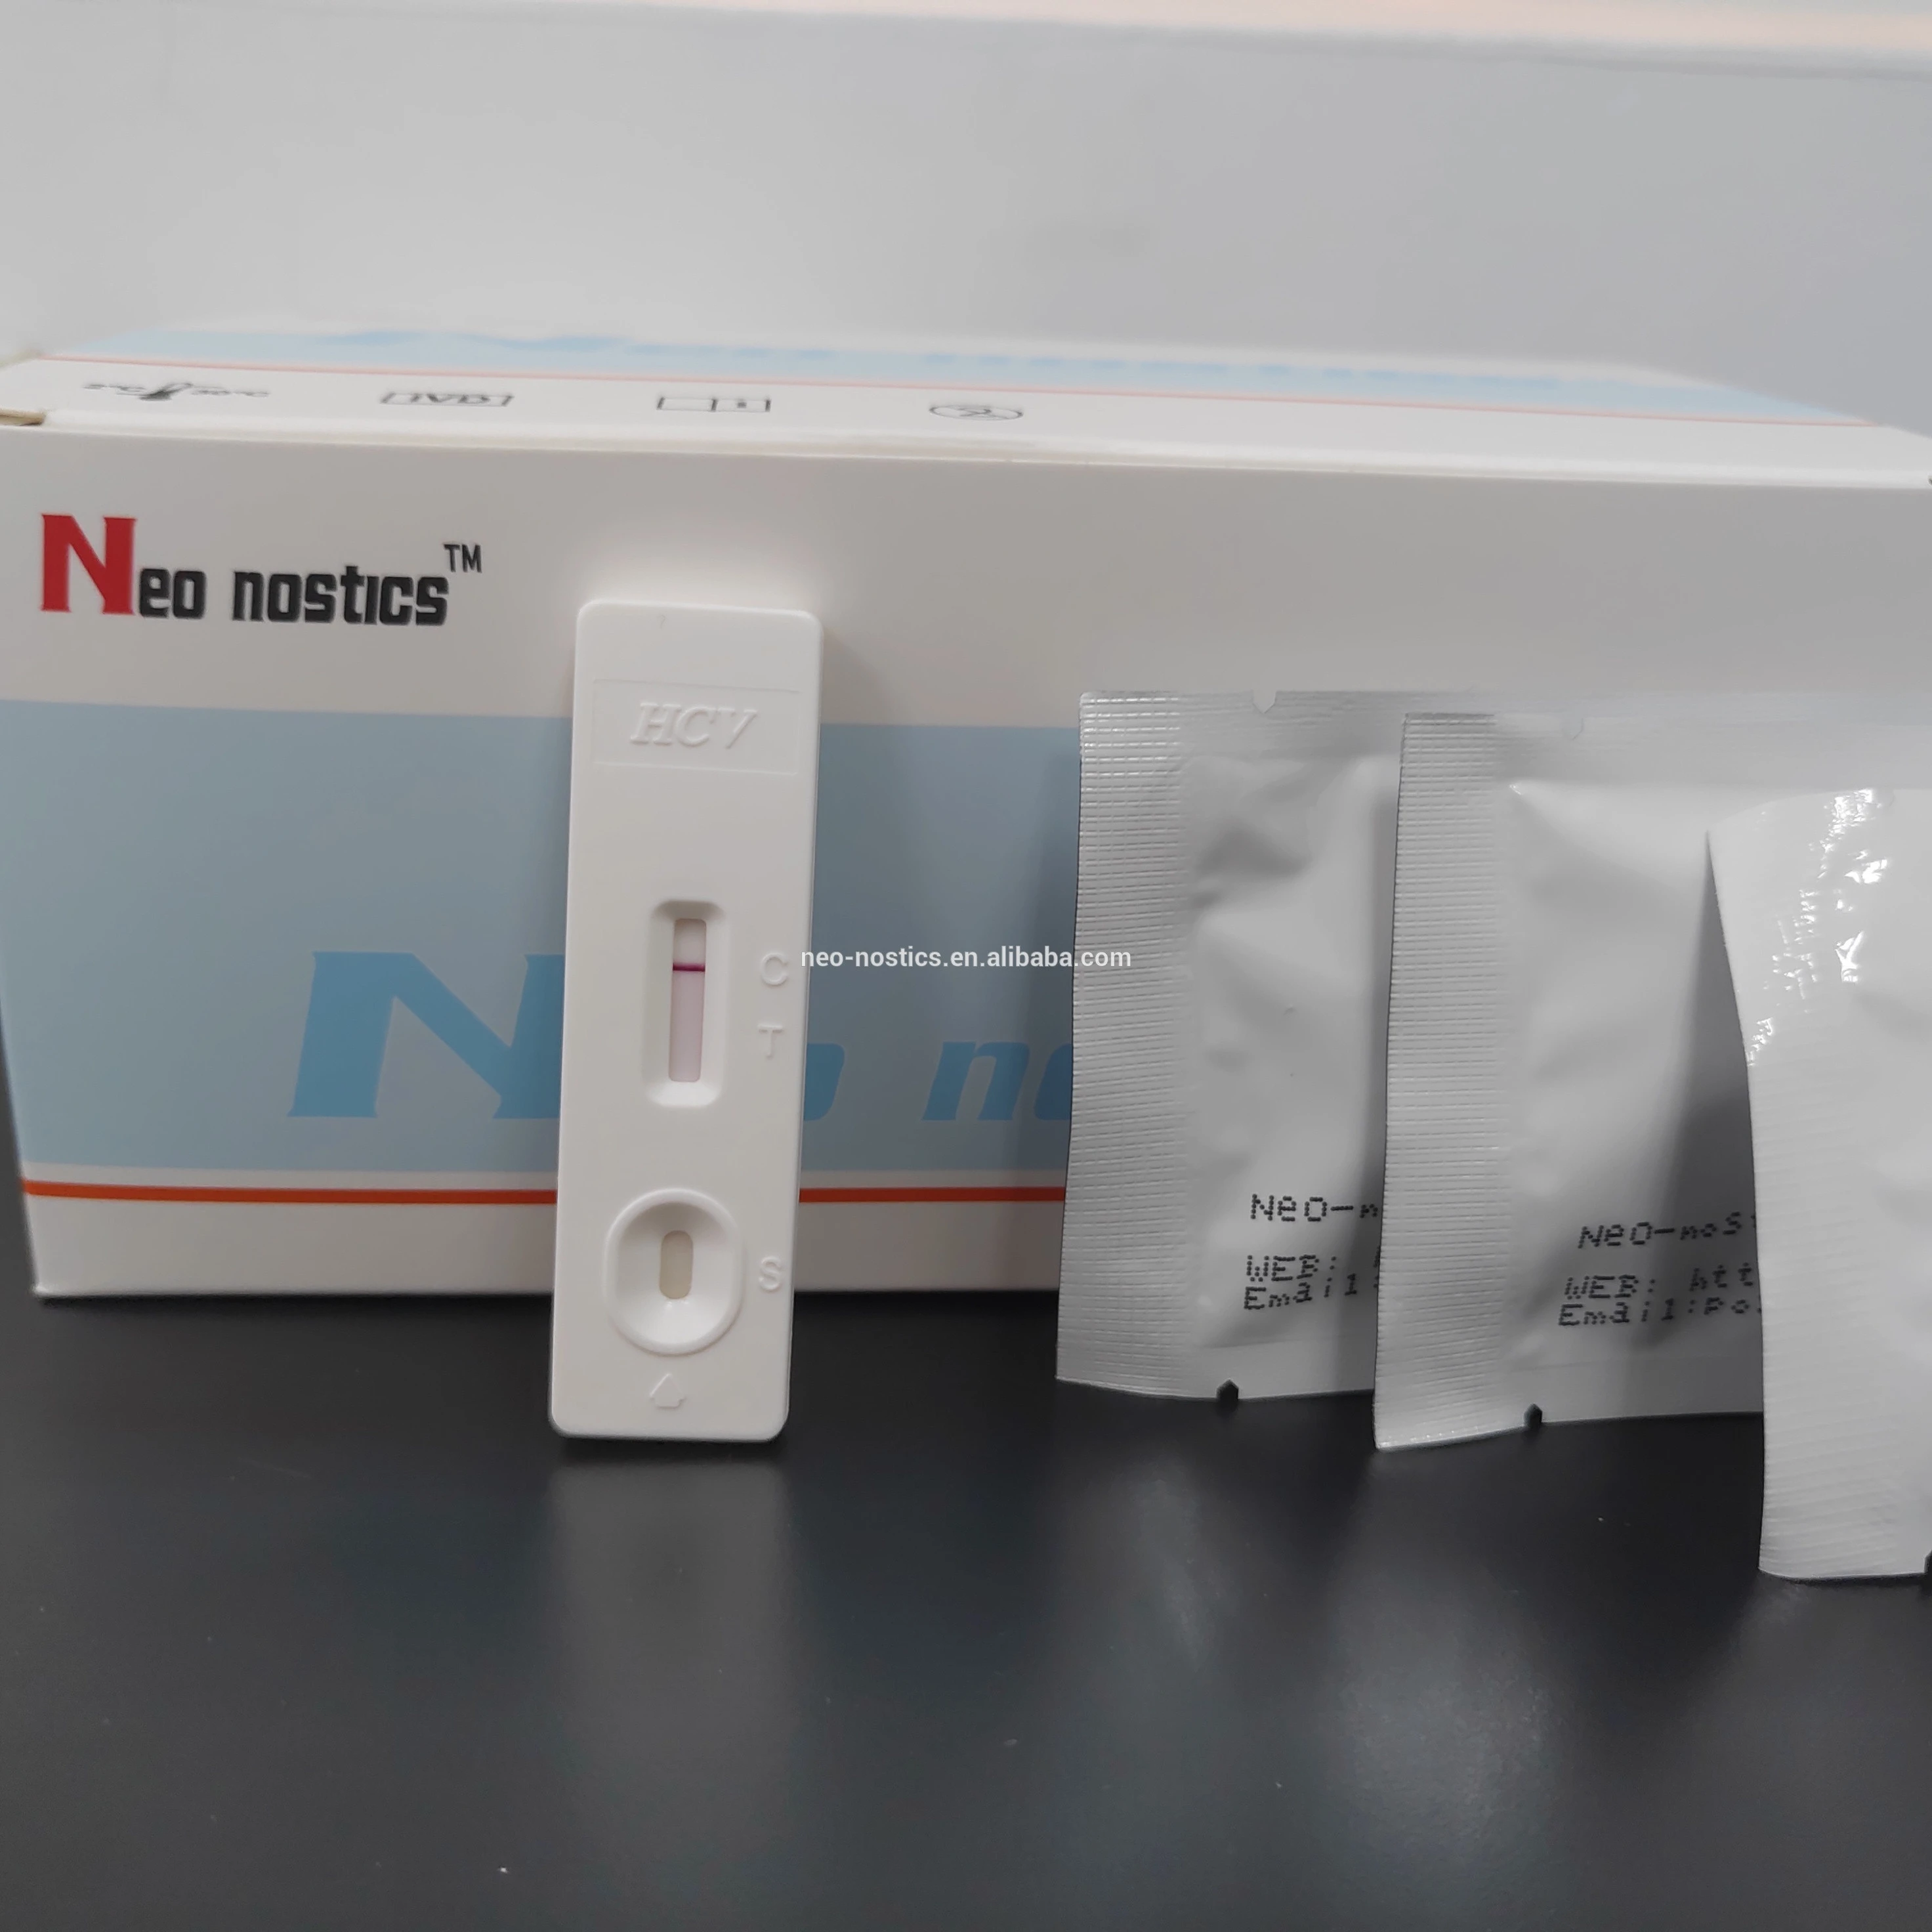 HCV Rapid Test Kit